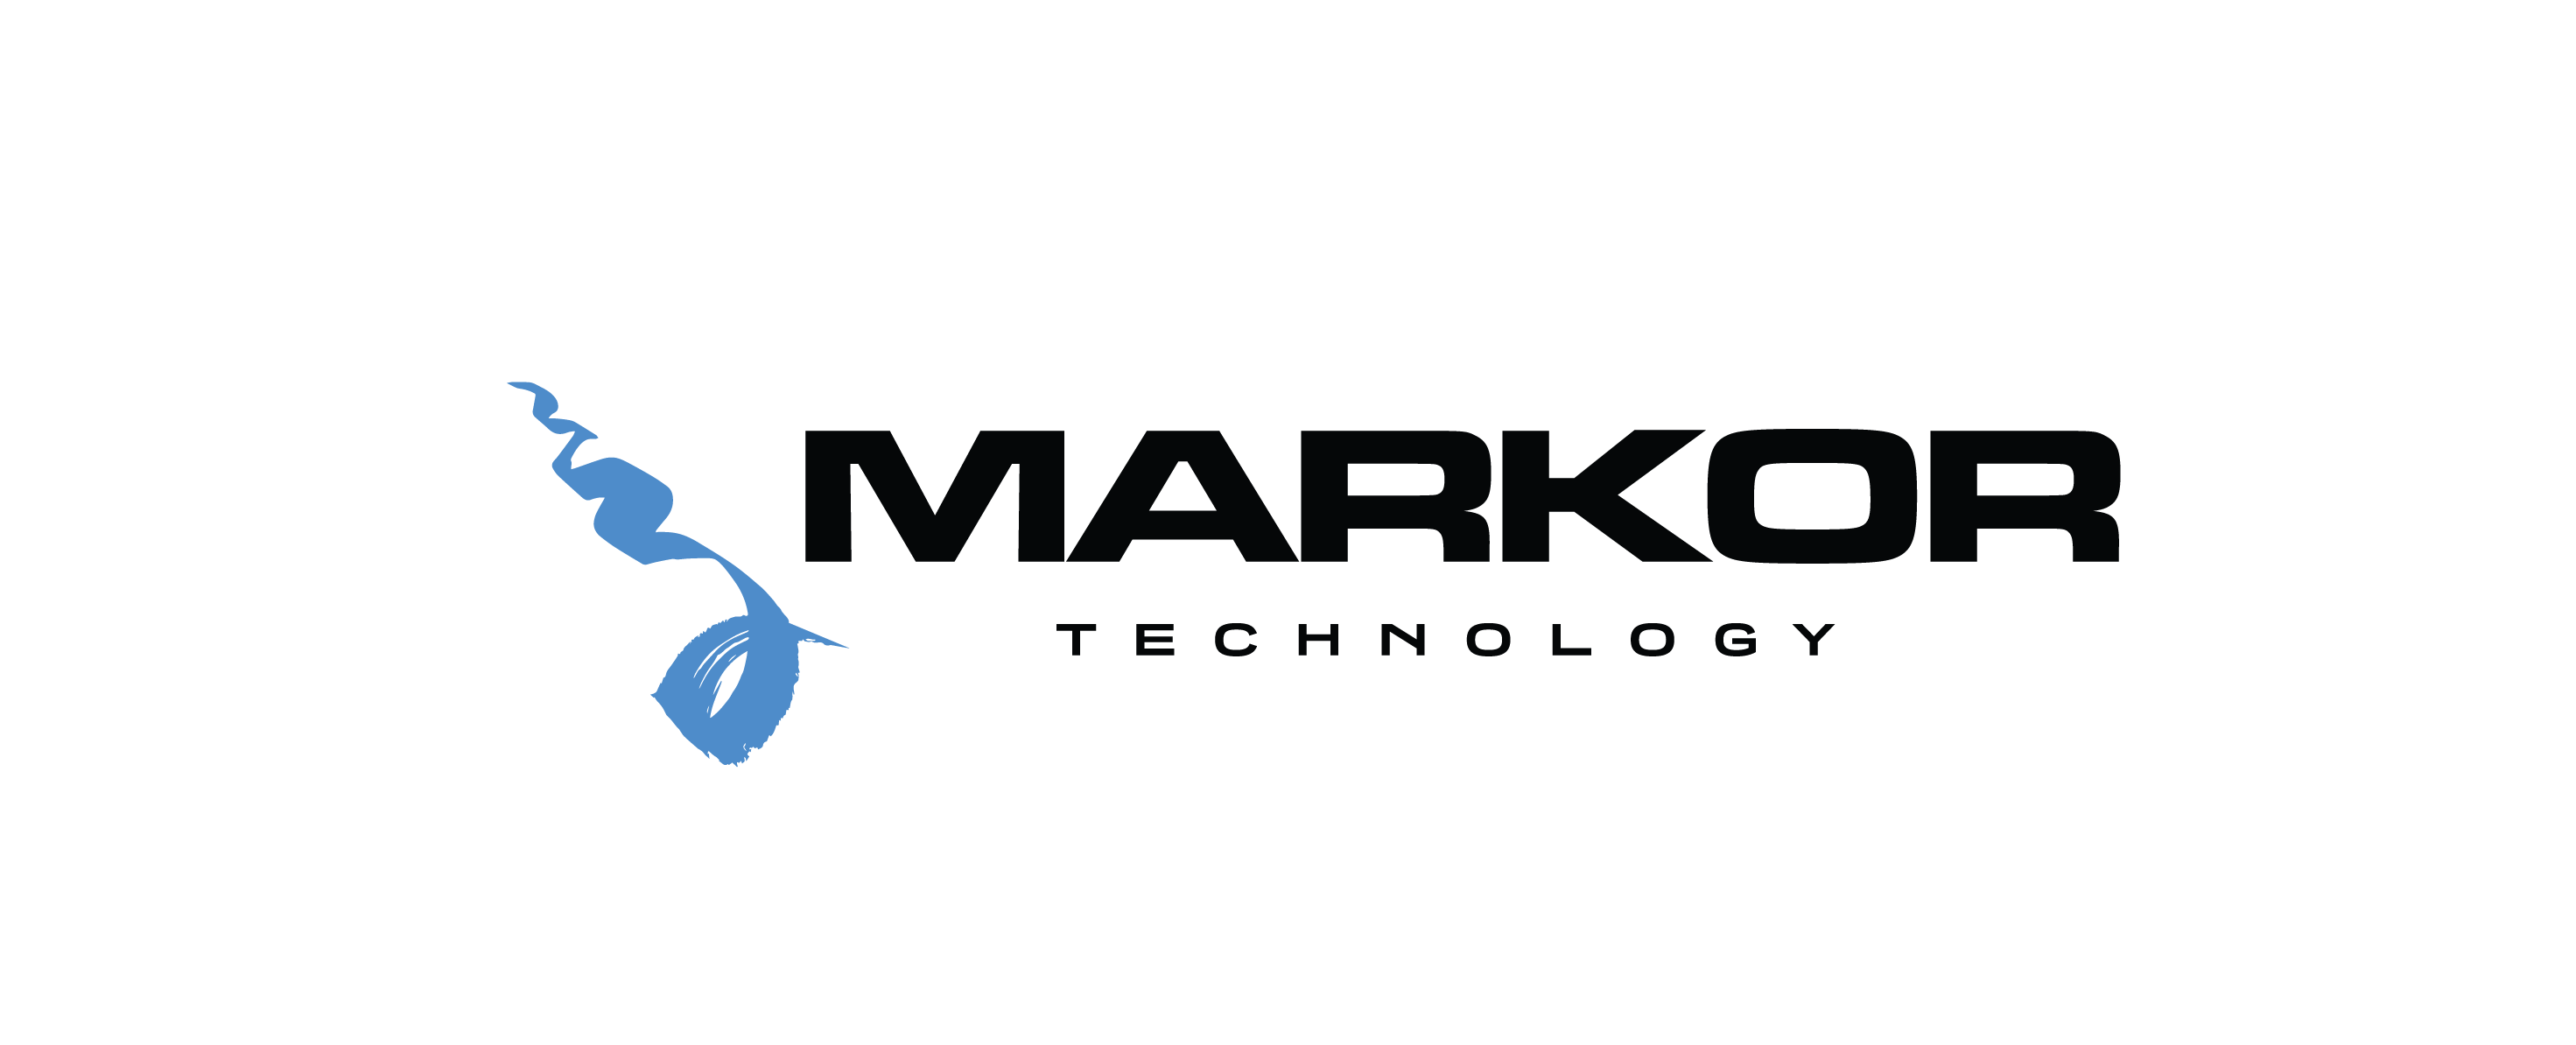 Markor Technology Spiele